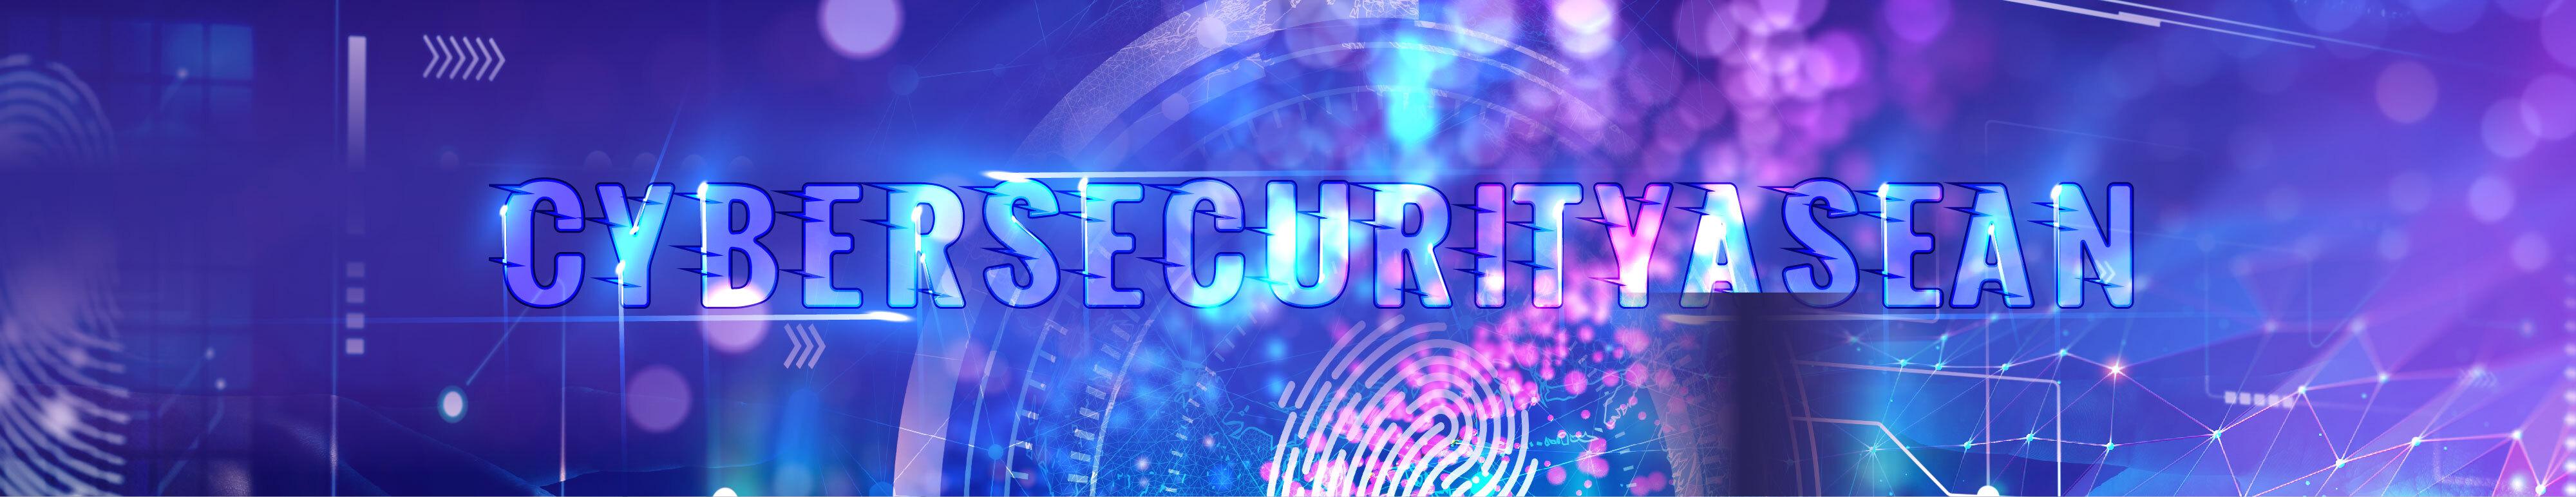 CyberSecurityAsean bannière